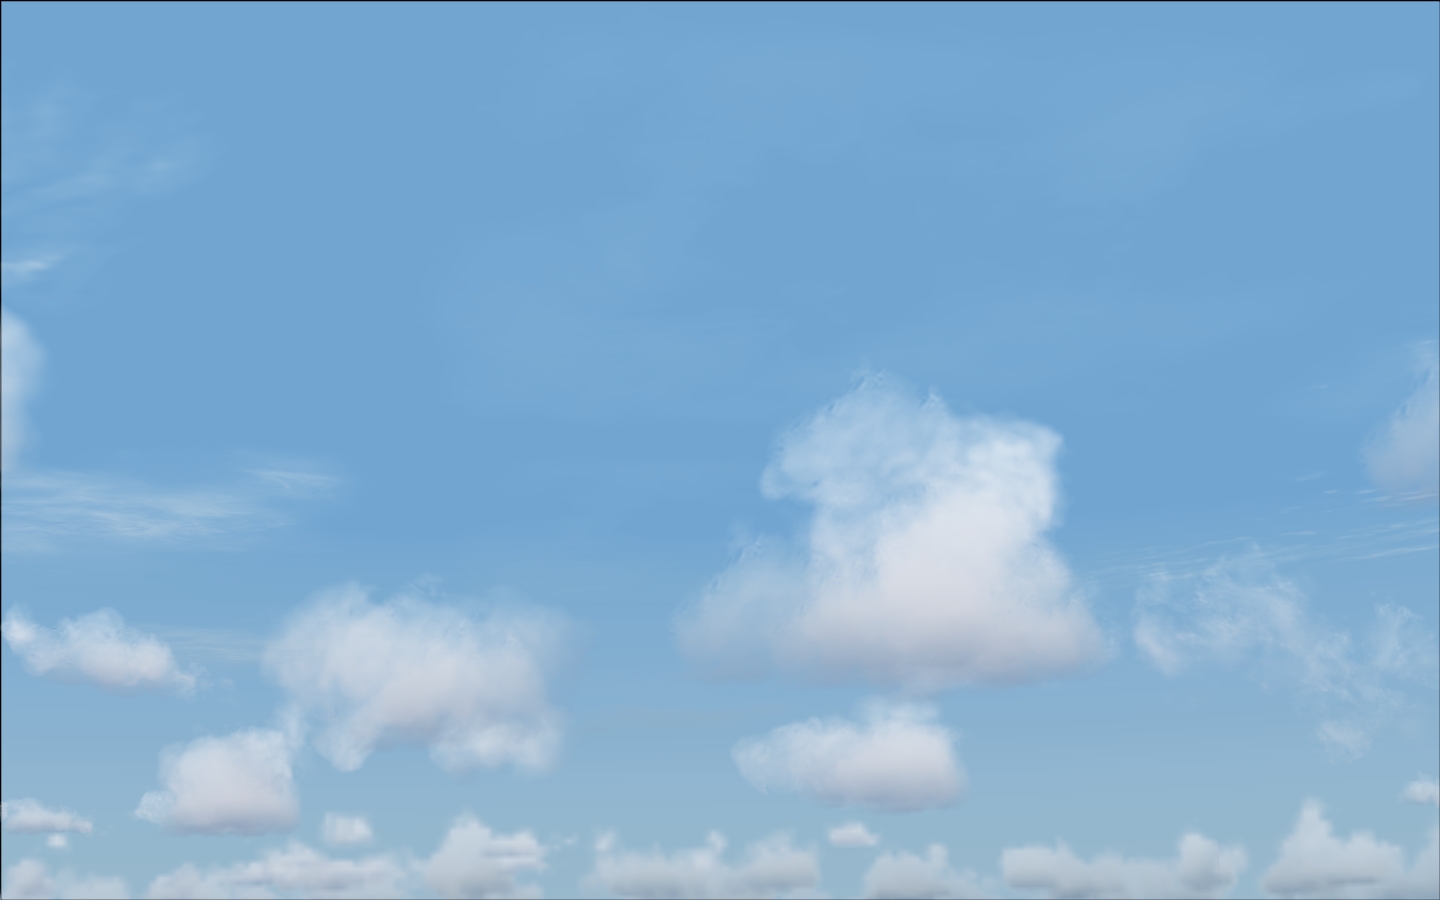 Sky texture background